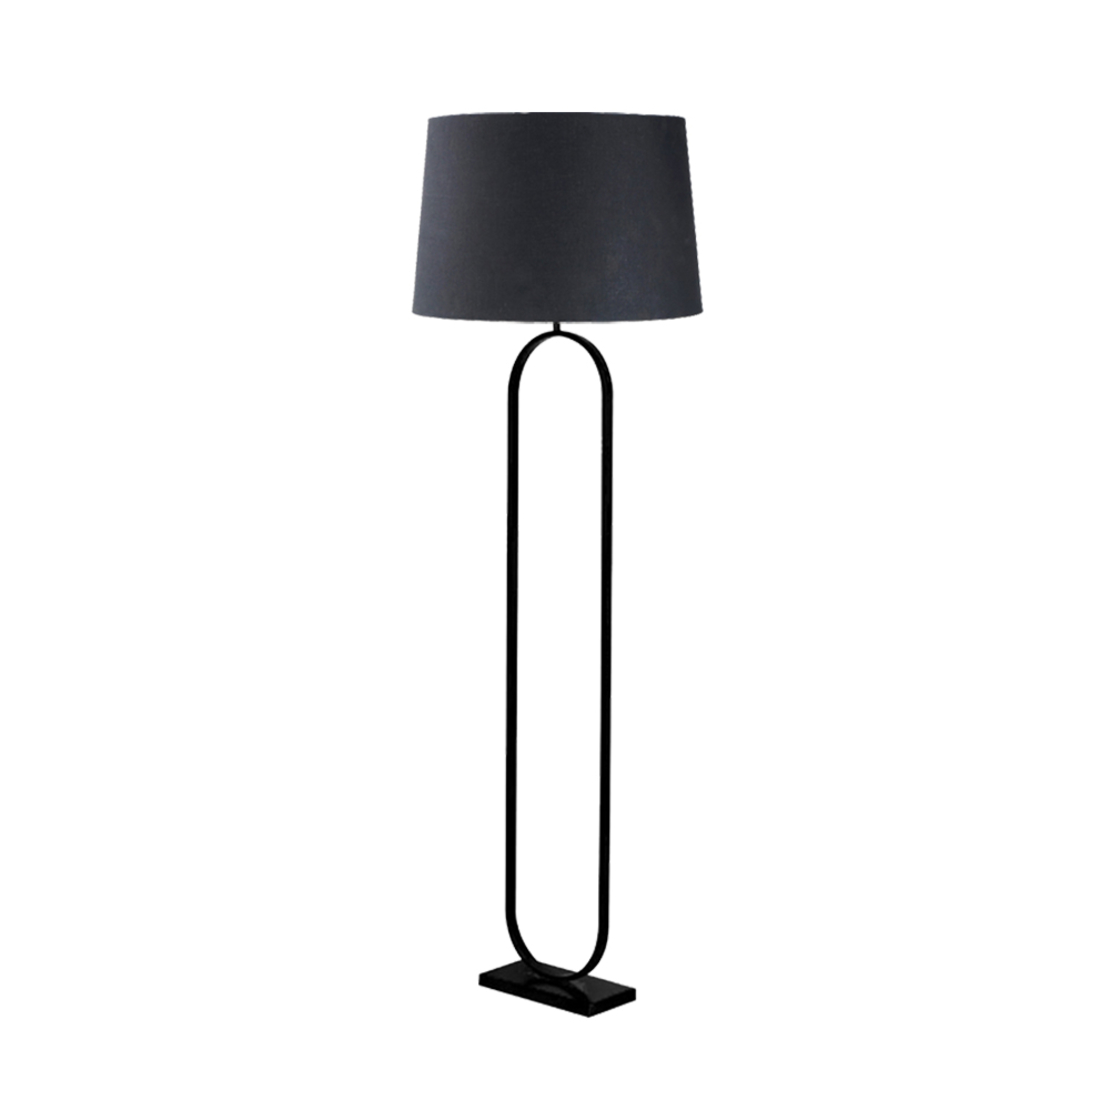 NEW ITEM 10 LAMP FLOOR IRON BLACK MATTE BLACK CE I